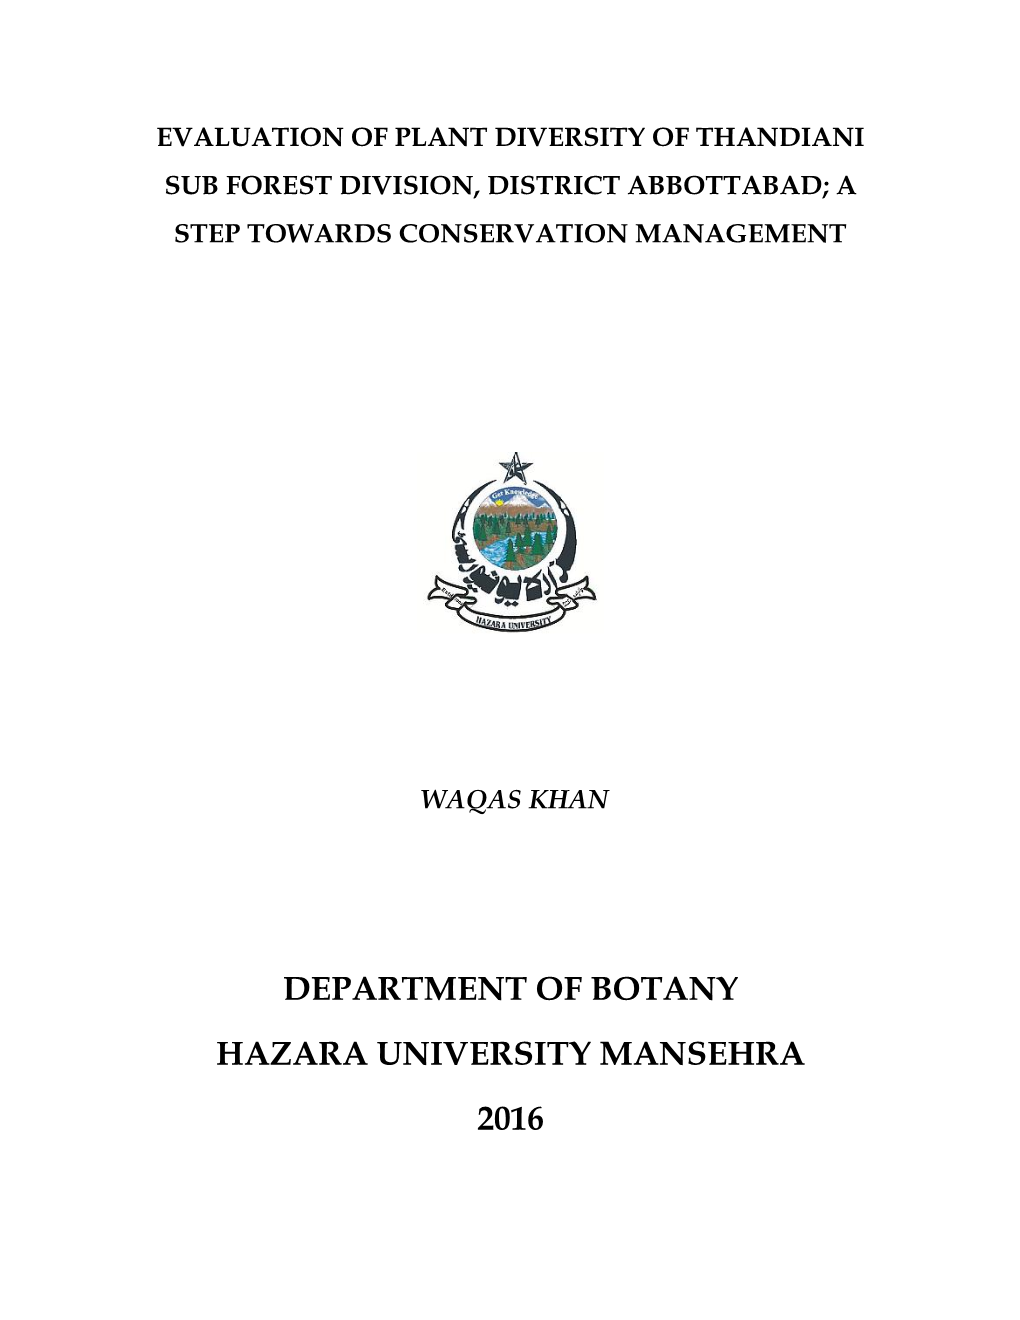 Department of Botany Hazara University Mansehra 2016